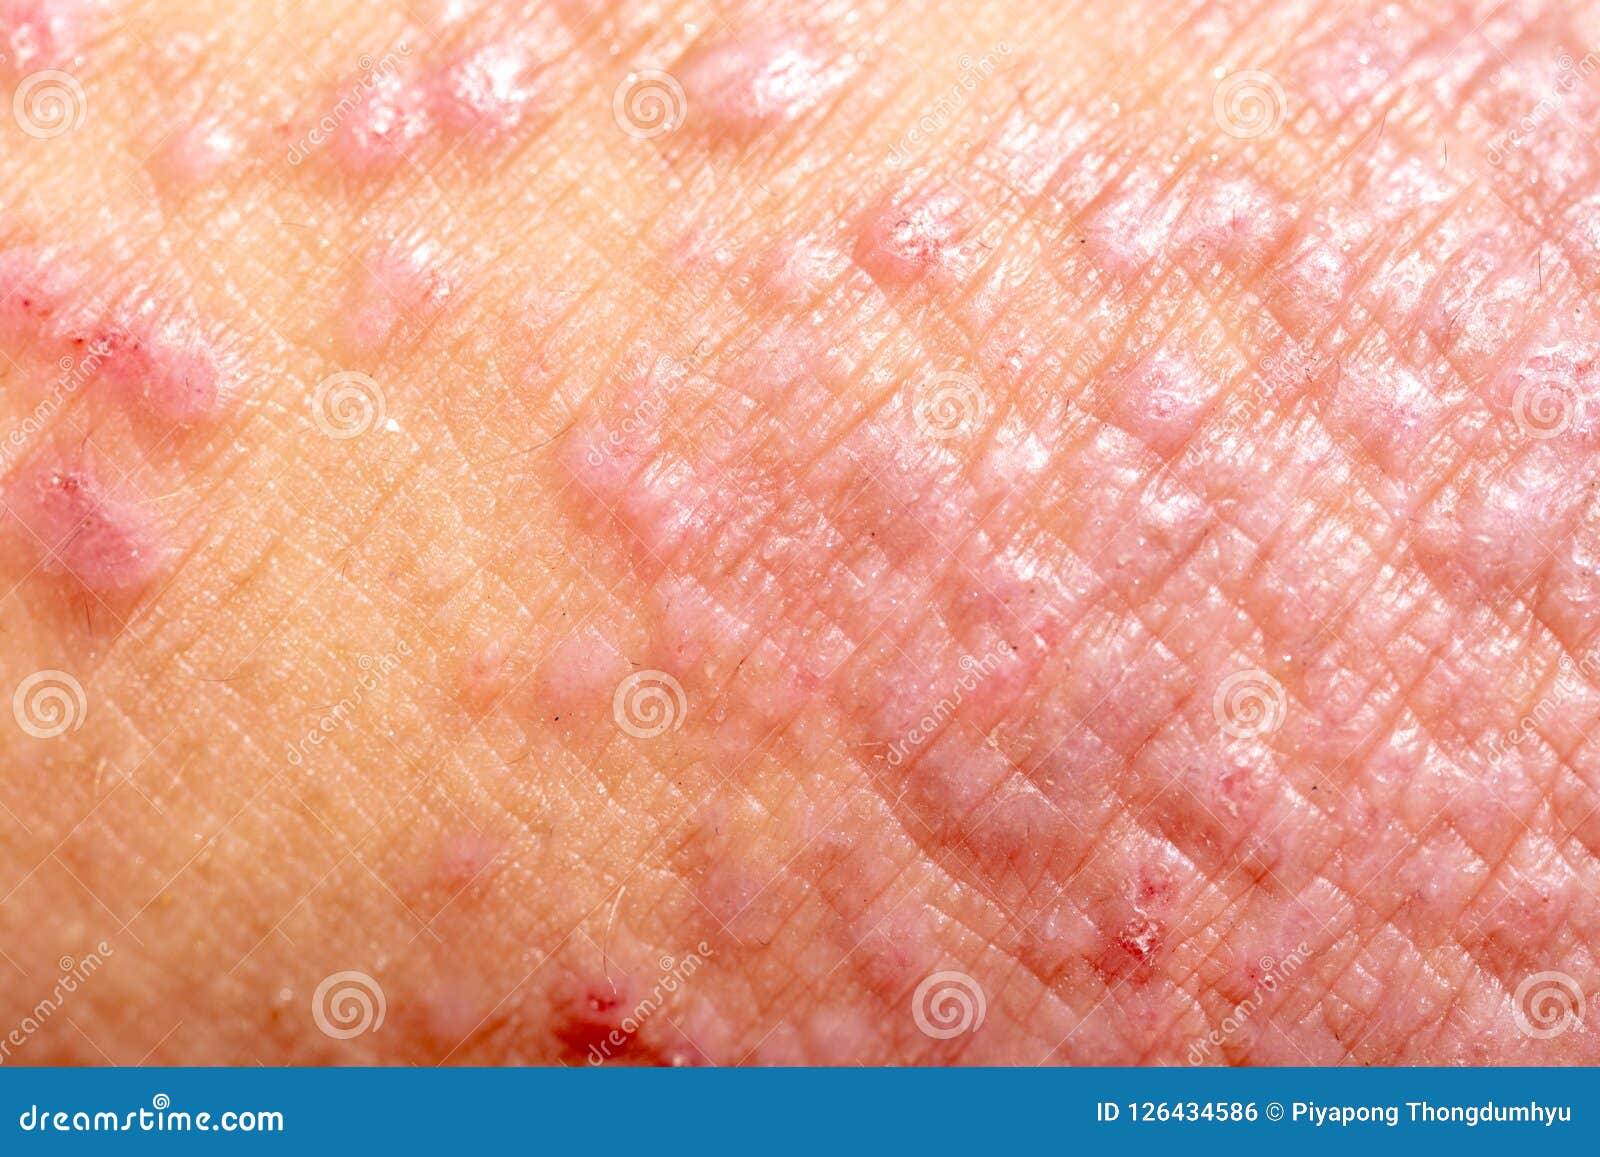 atopic eczema pictures traumeel pikkelysömörhöz